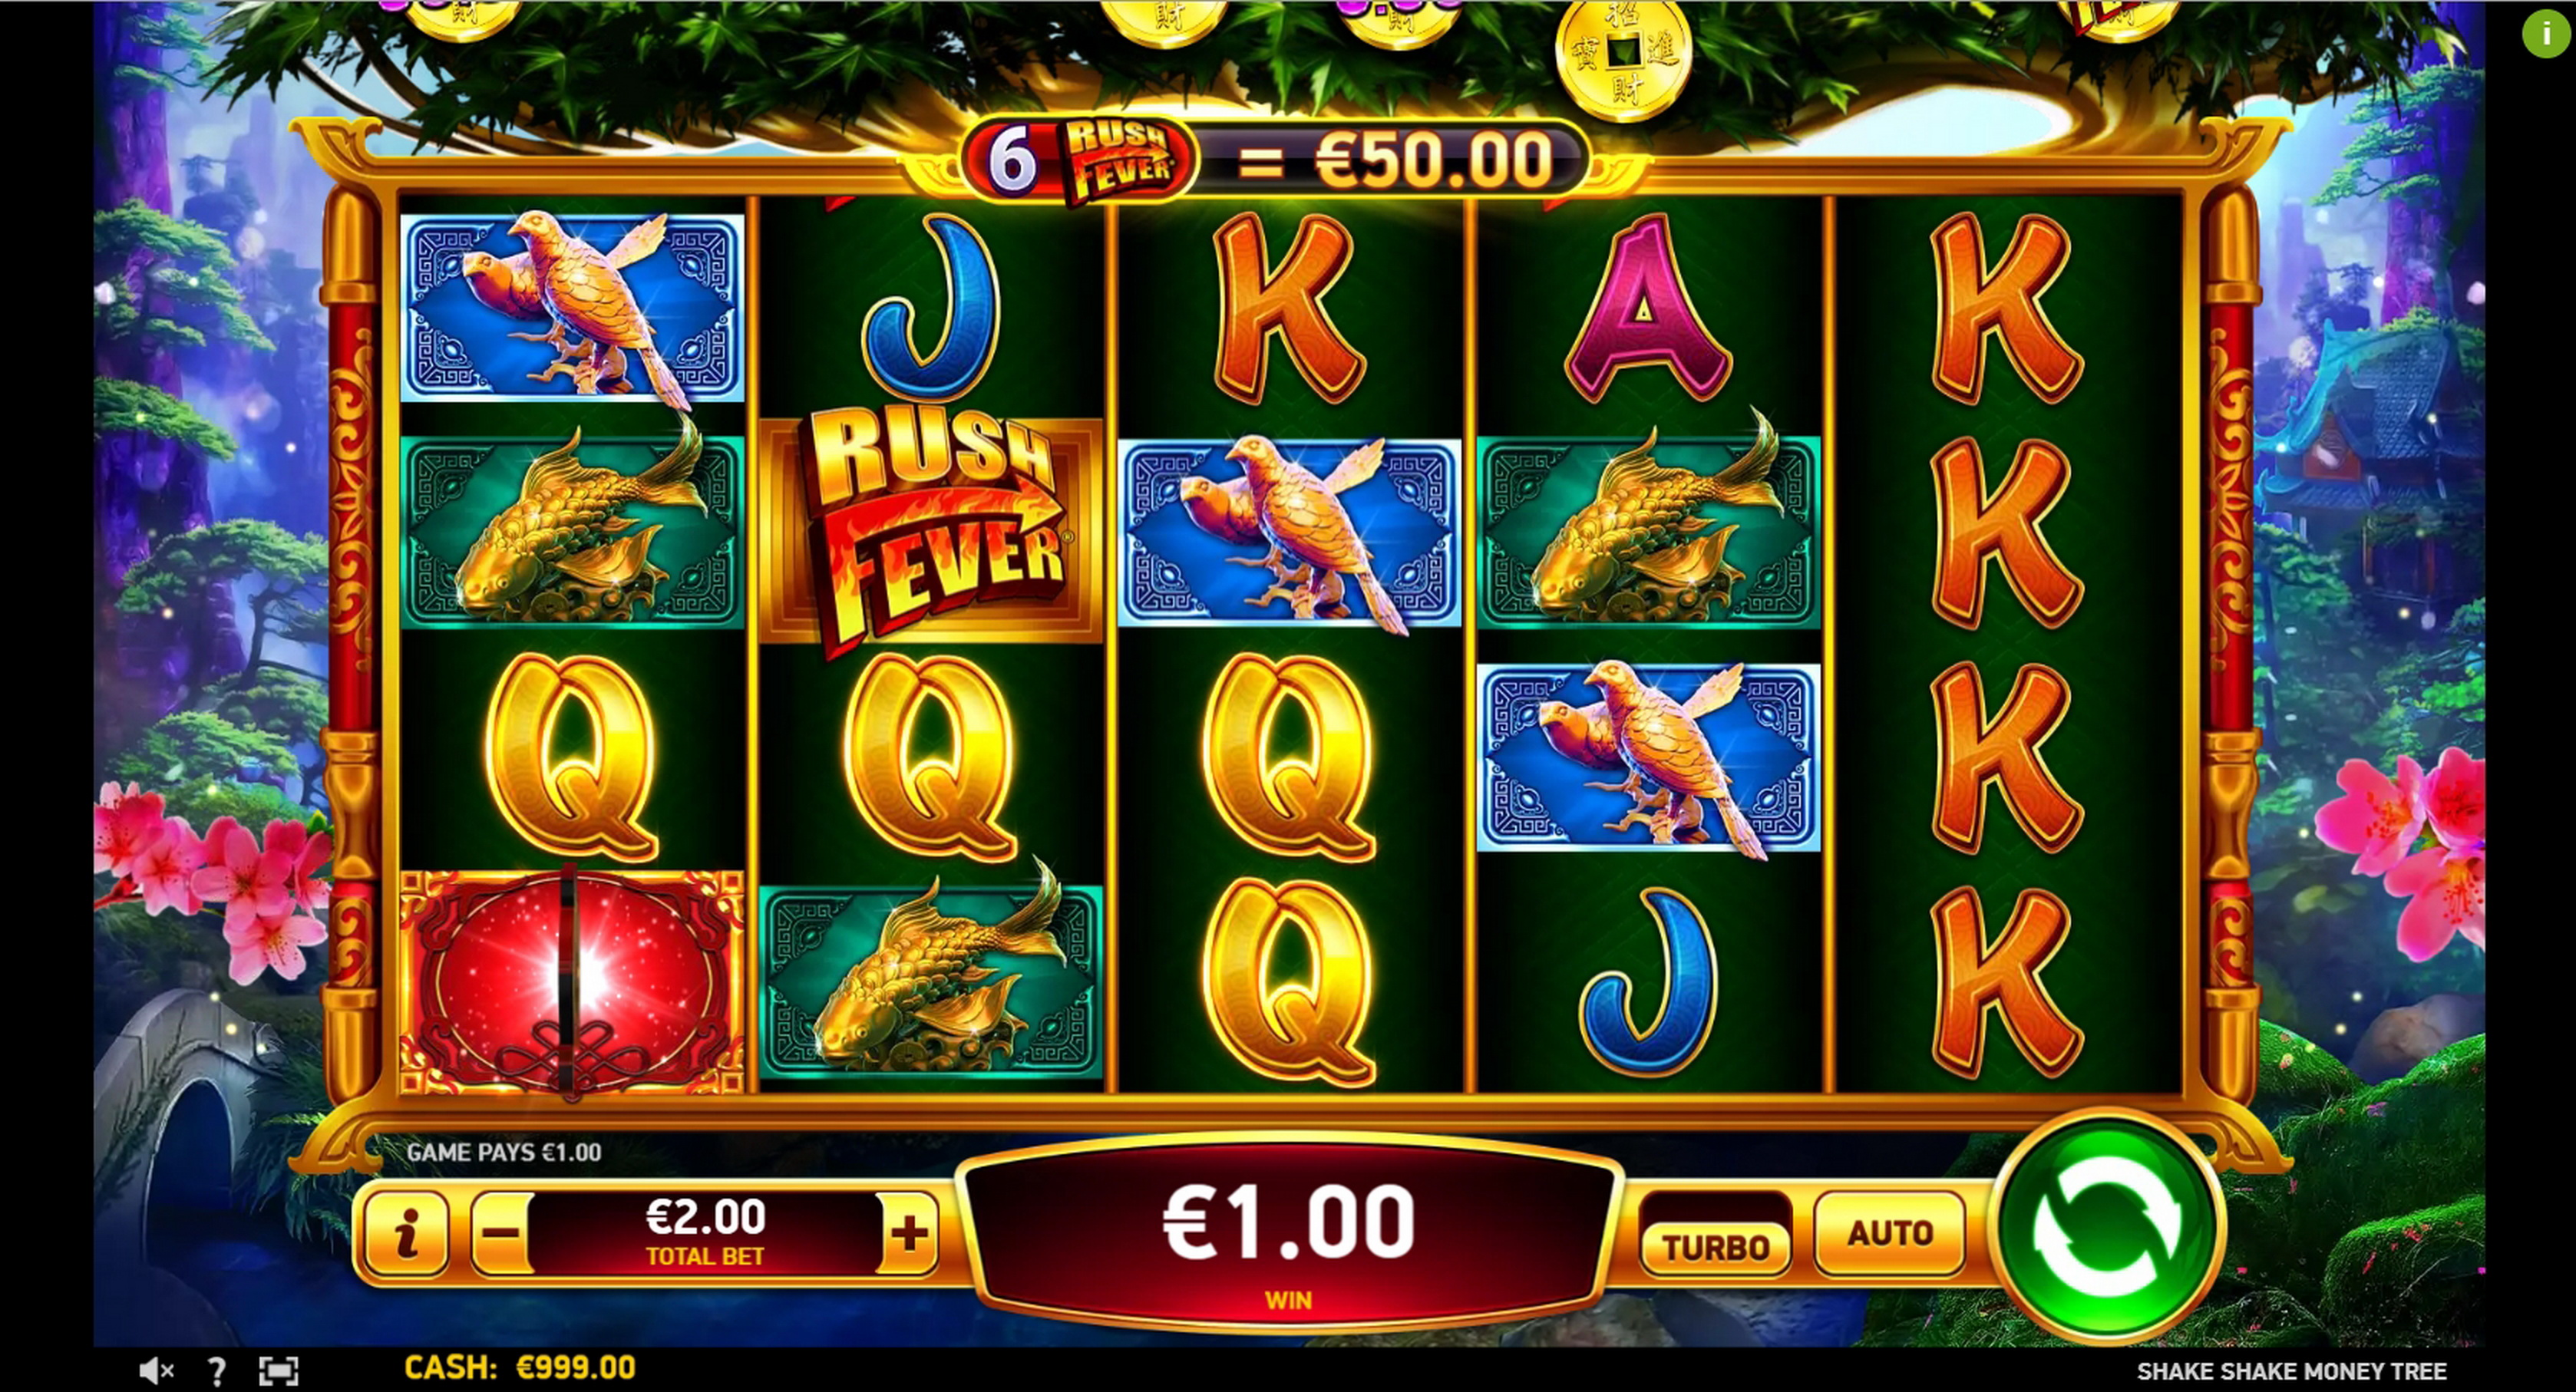 Win Money in Shake Shake Money Tree Free Slot Game by Ruby Play